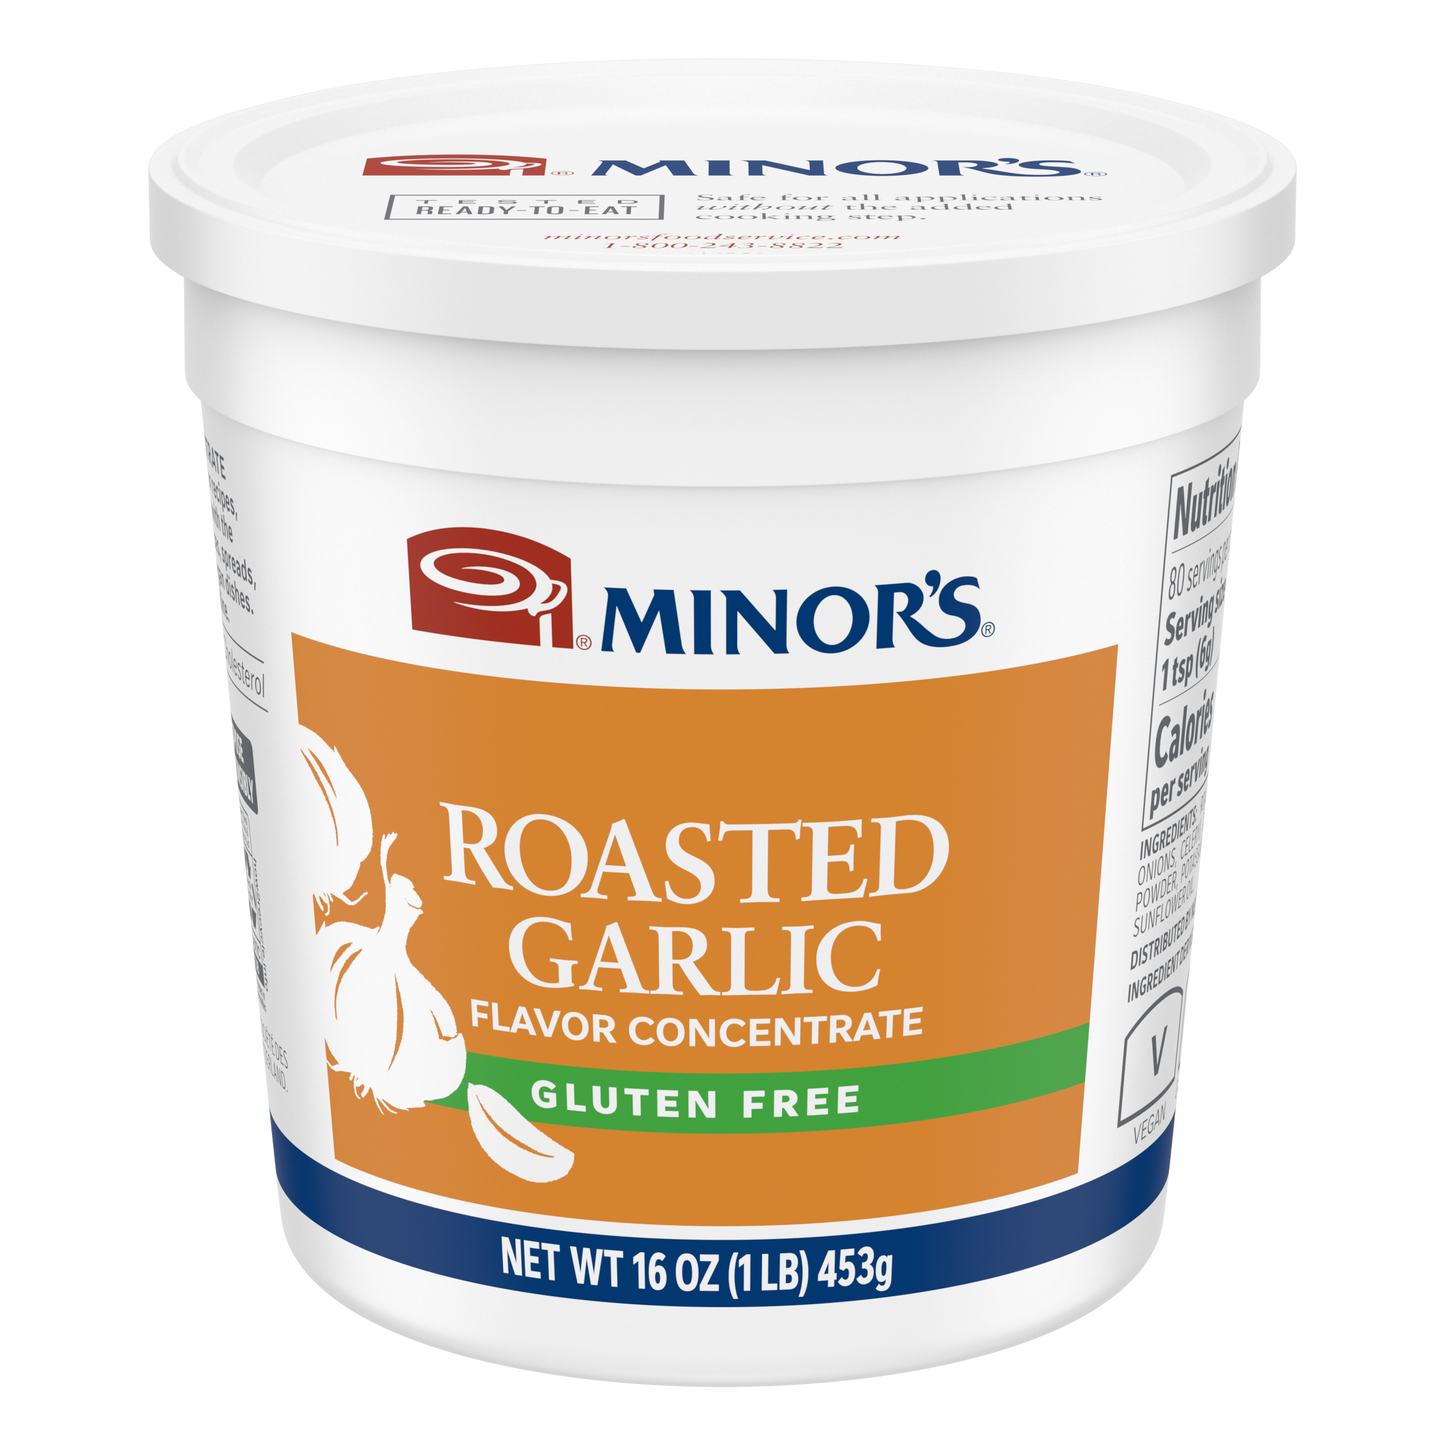 Minor's Roasted Garlic Flavor Concentrate - 1 lb - #142